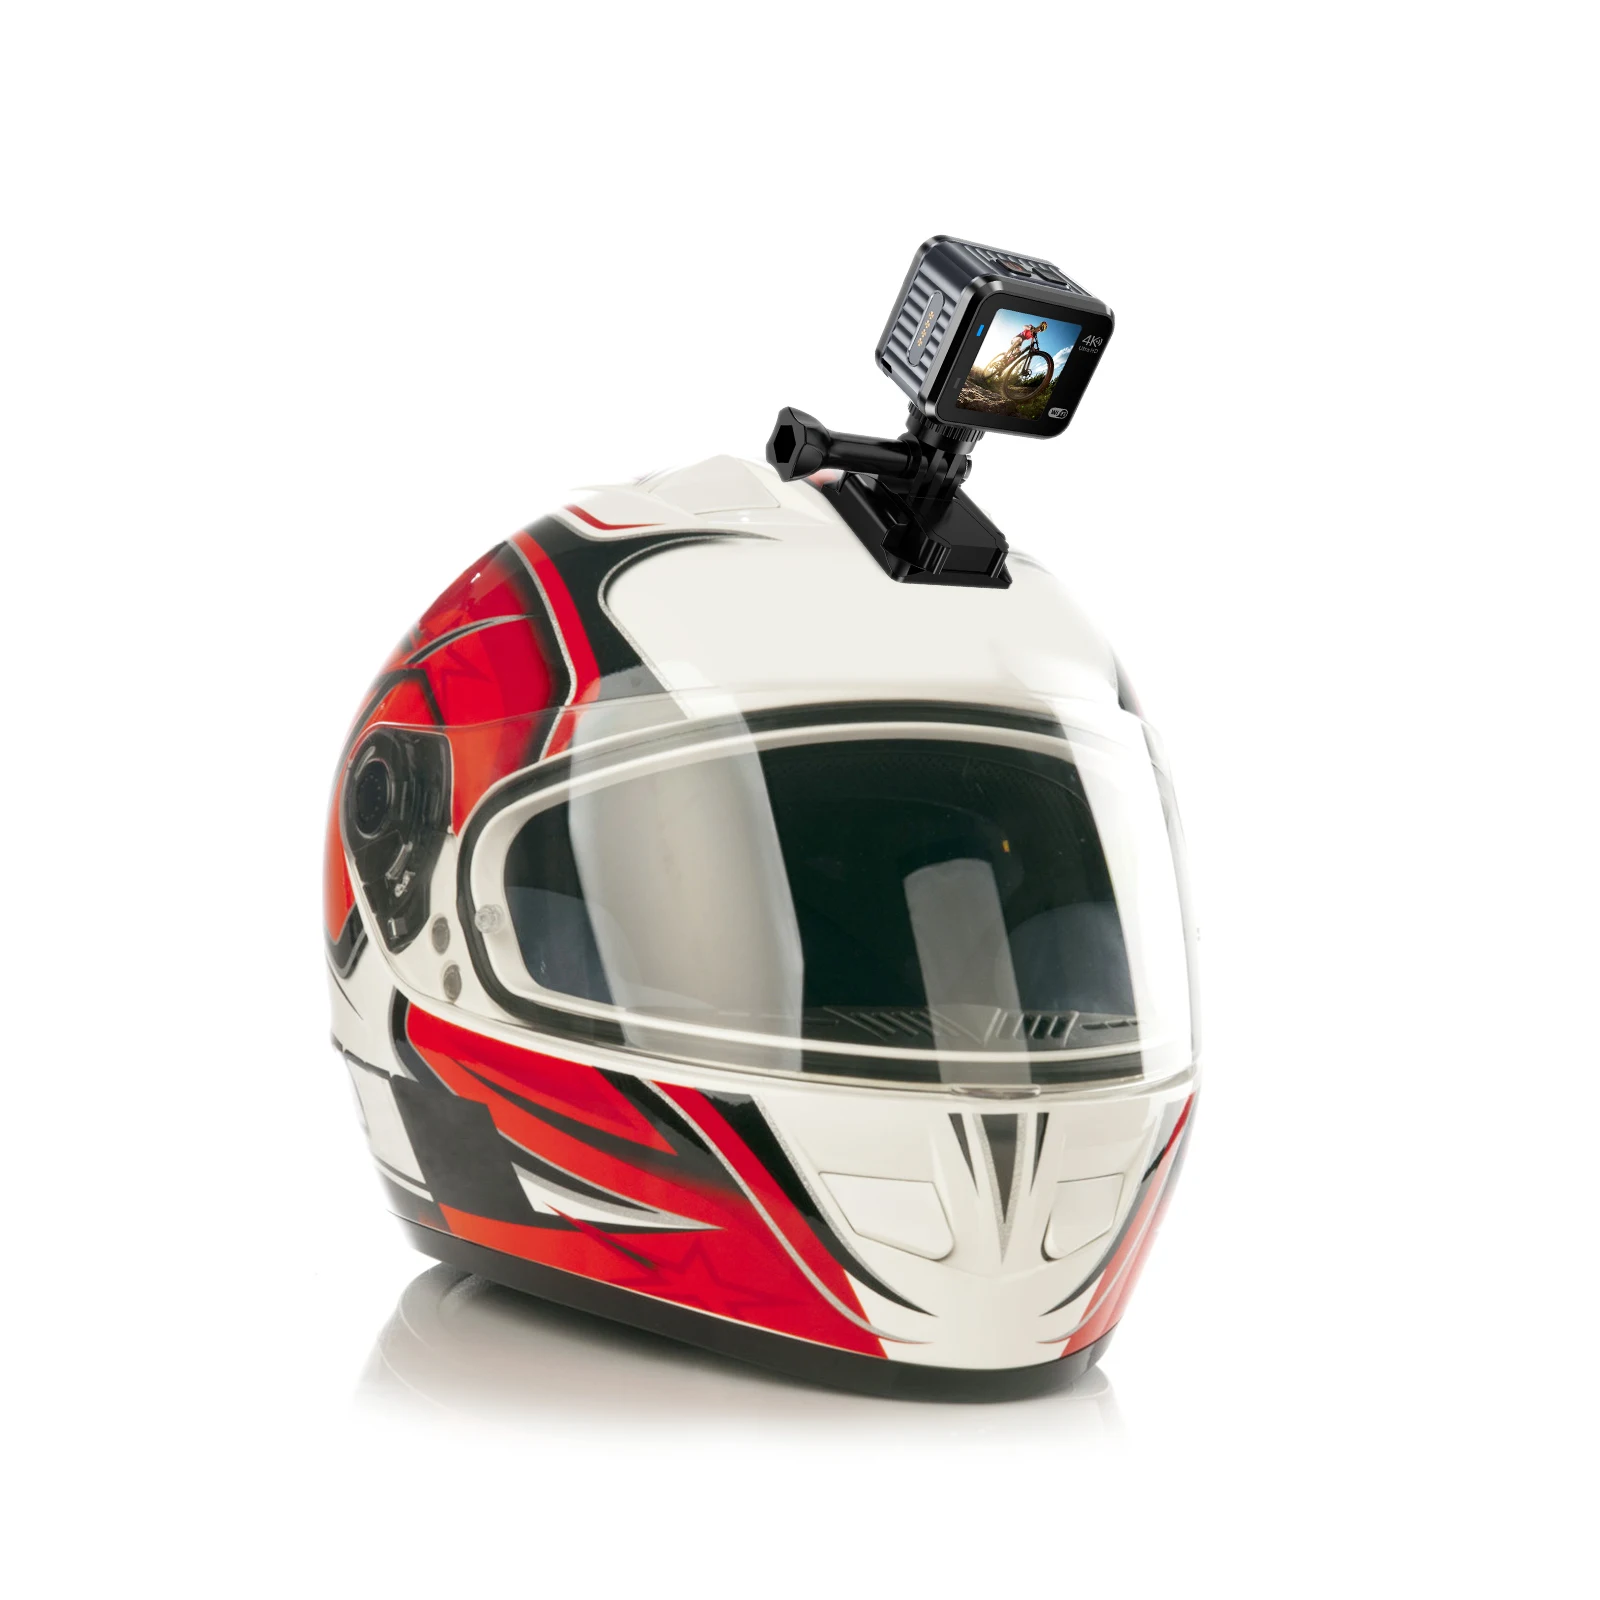 CERASTES Mini 4K/60fps Ultra HD Action Camera V8 20MP WiFi 170D 10M Body Waterproof Helmet Video Recording Cameras Sports DV Cam images - 6